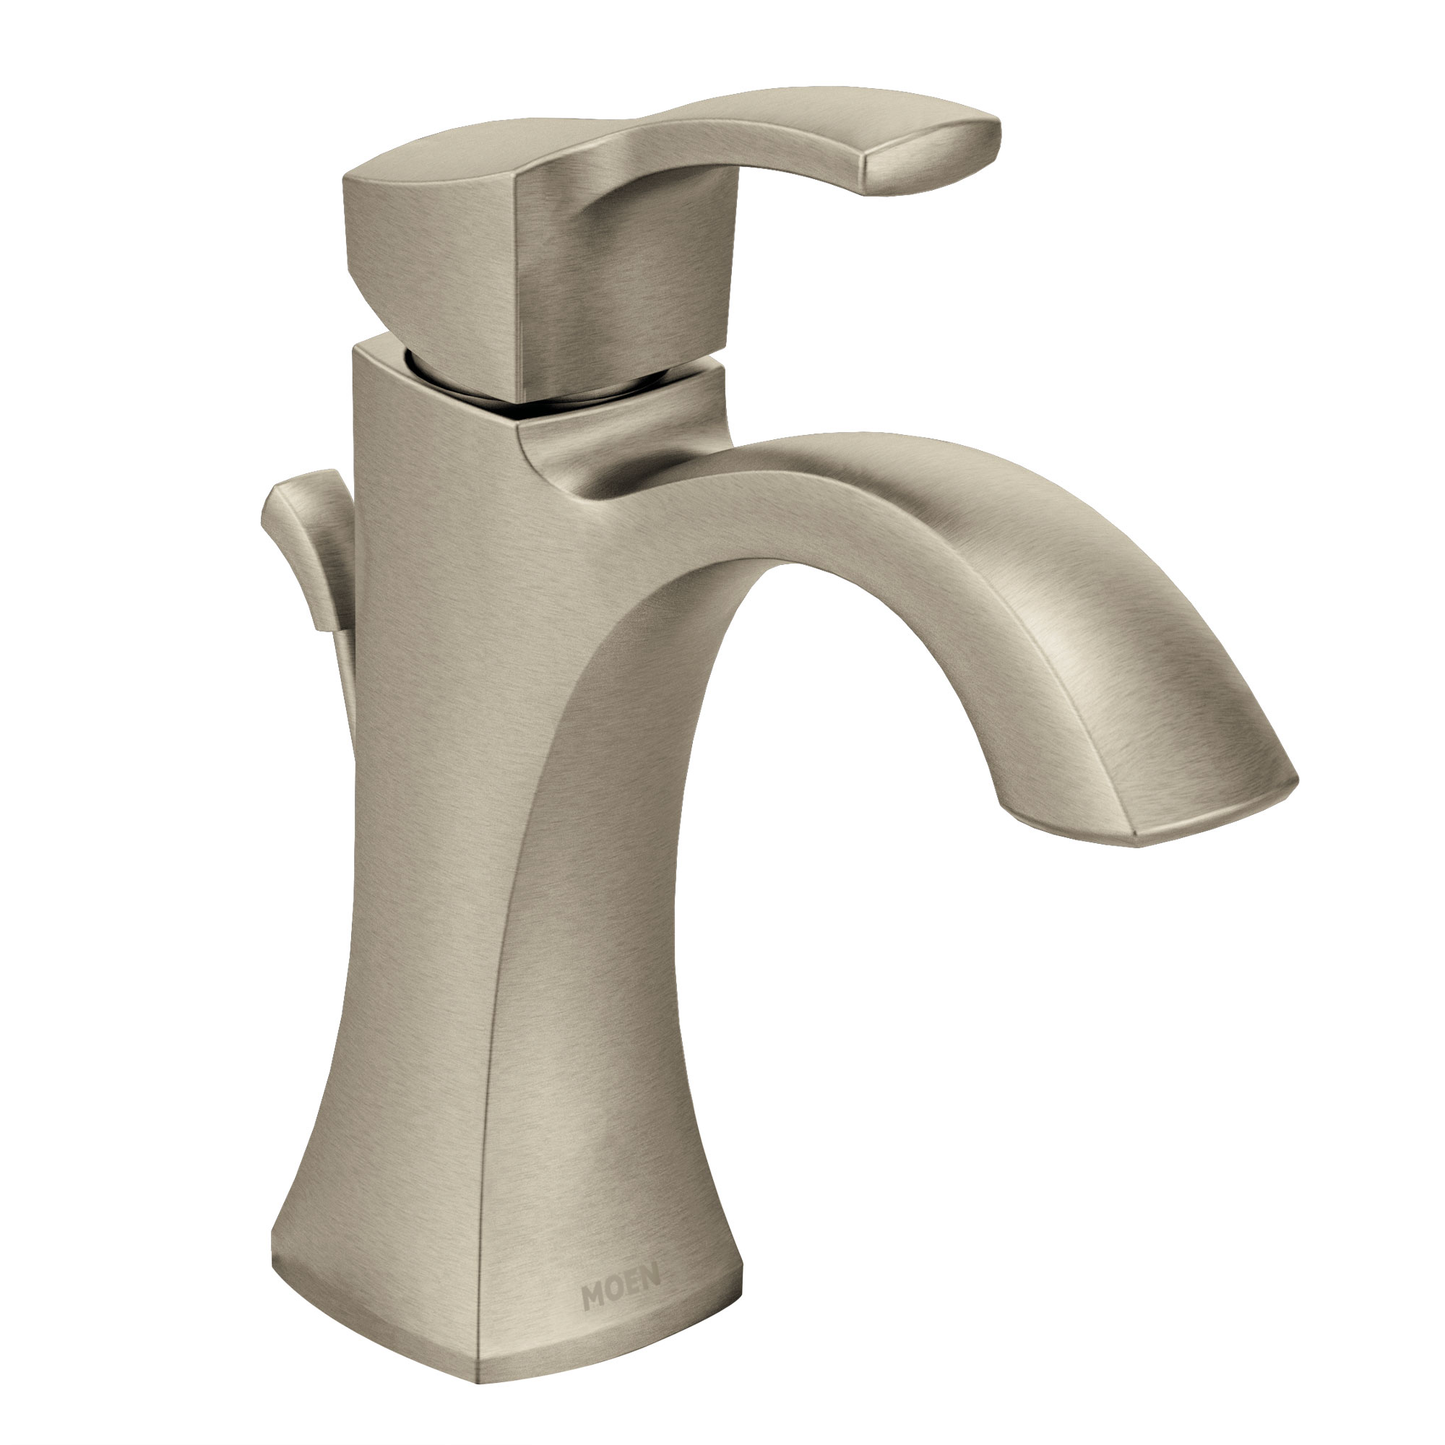 Voss One-Handle High Arc Bathroom Faucet